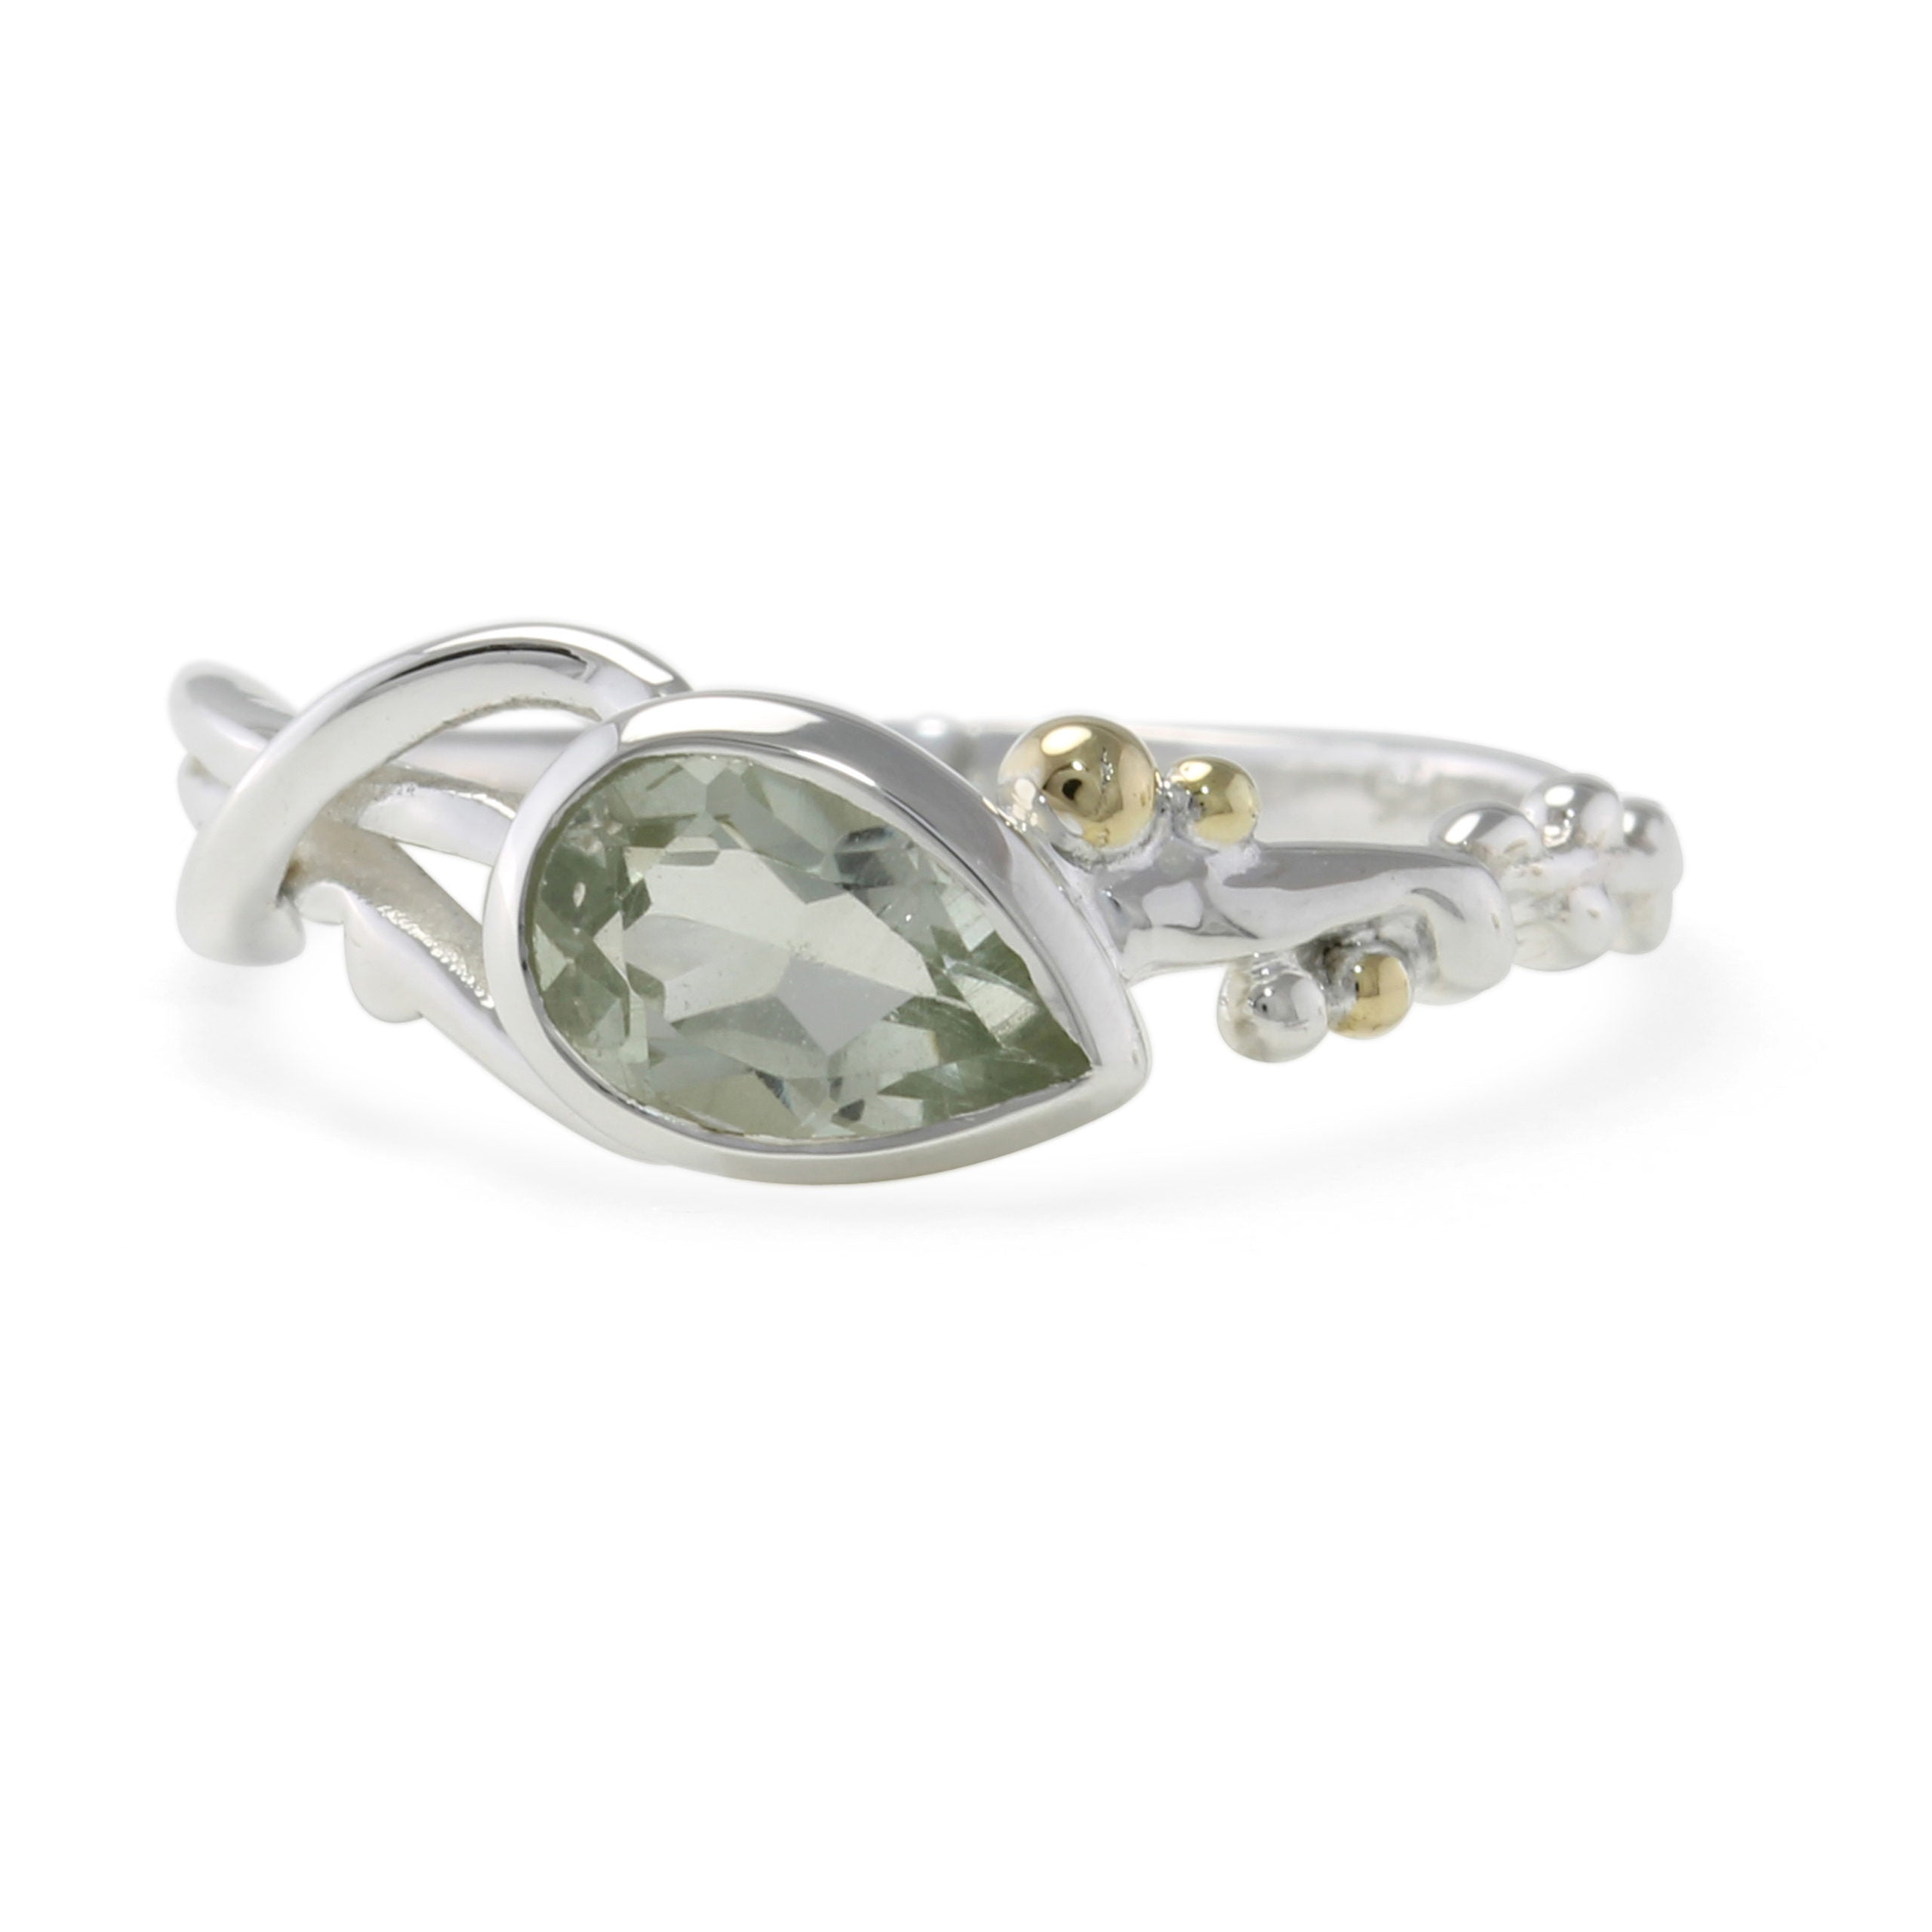 Green Amethyst Ring - The Nancy Smillie Shop - Art, Jewellery & Designer Gifts Glasgow